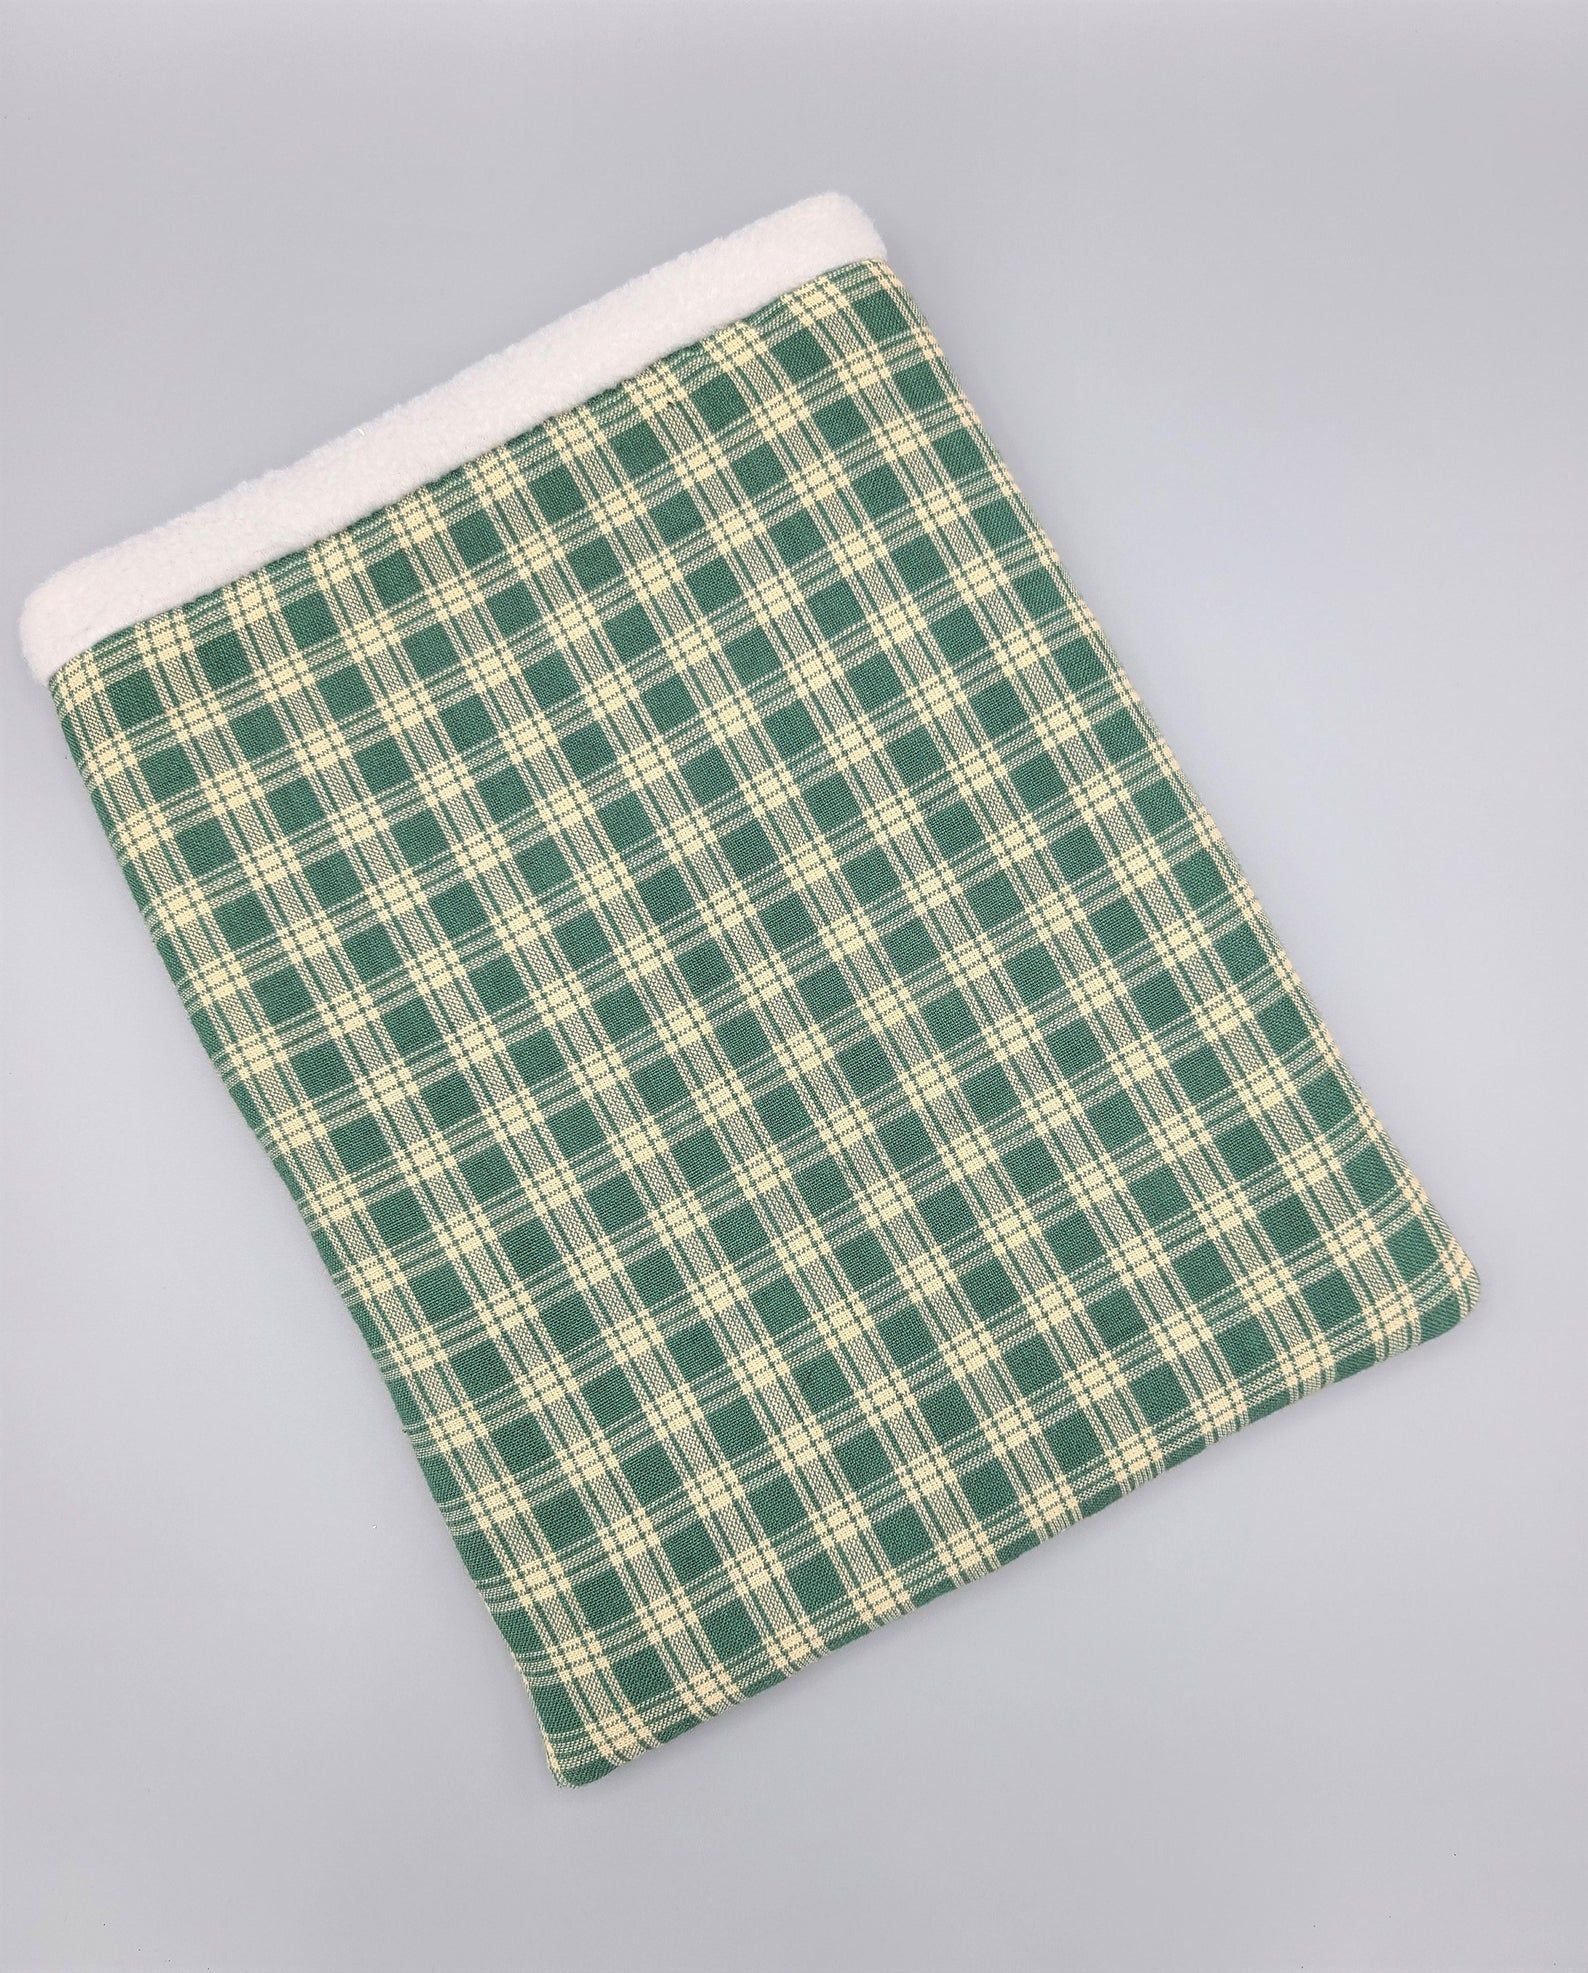 Green plaid book sleeve.